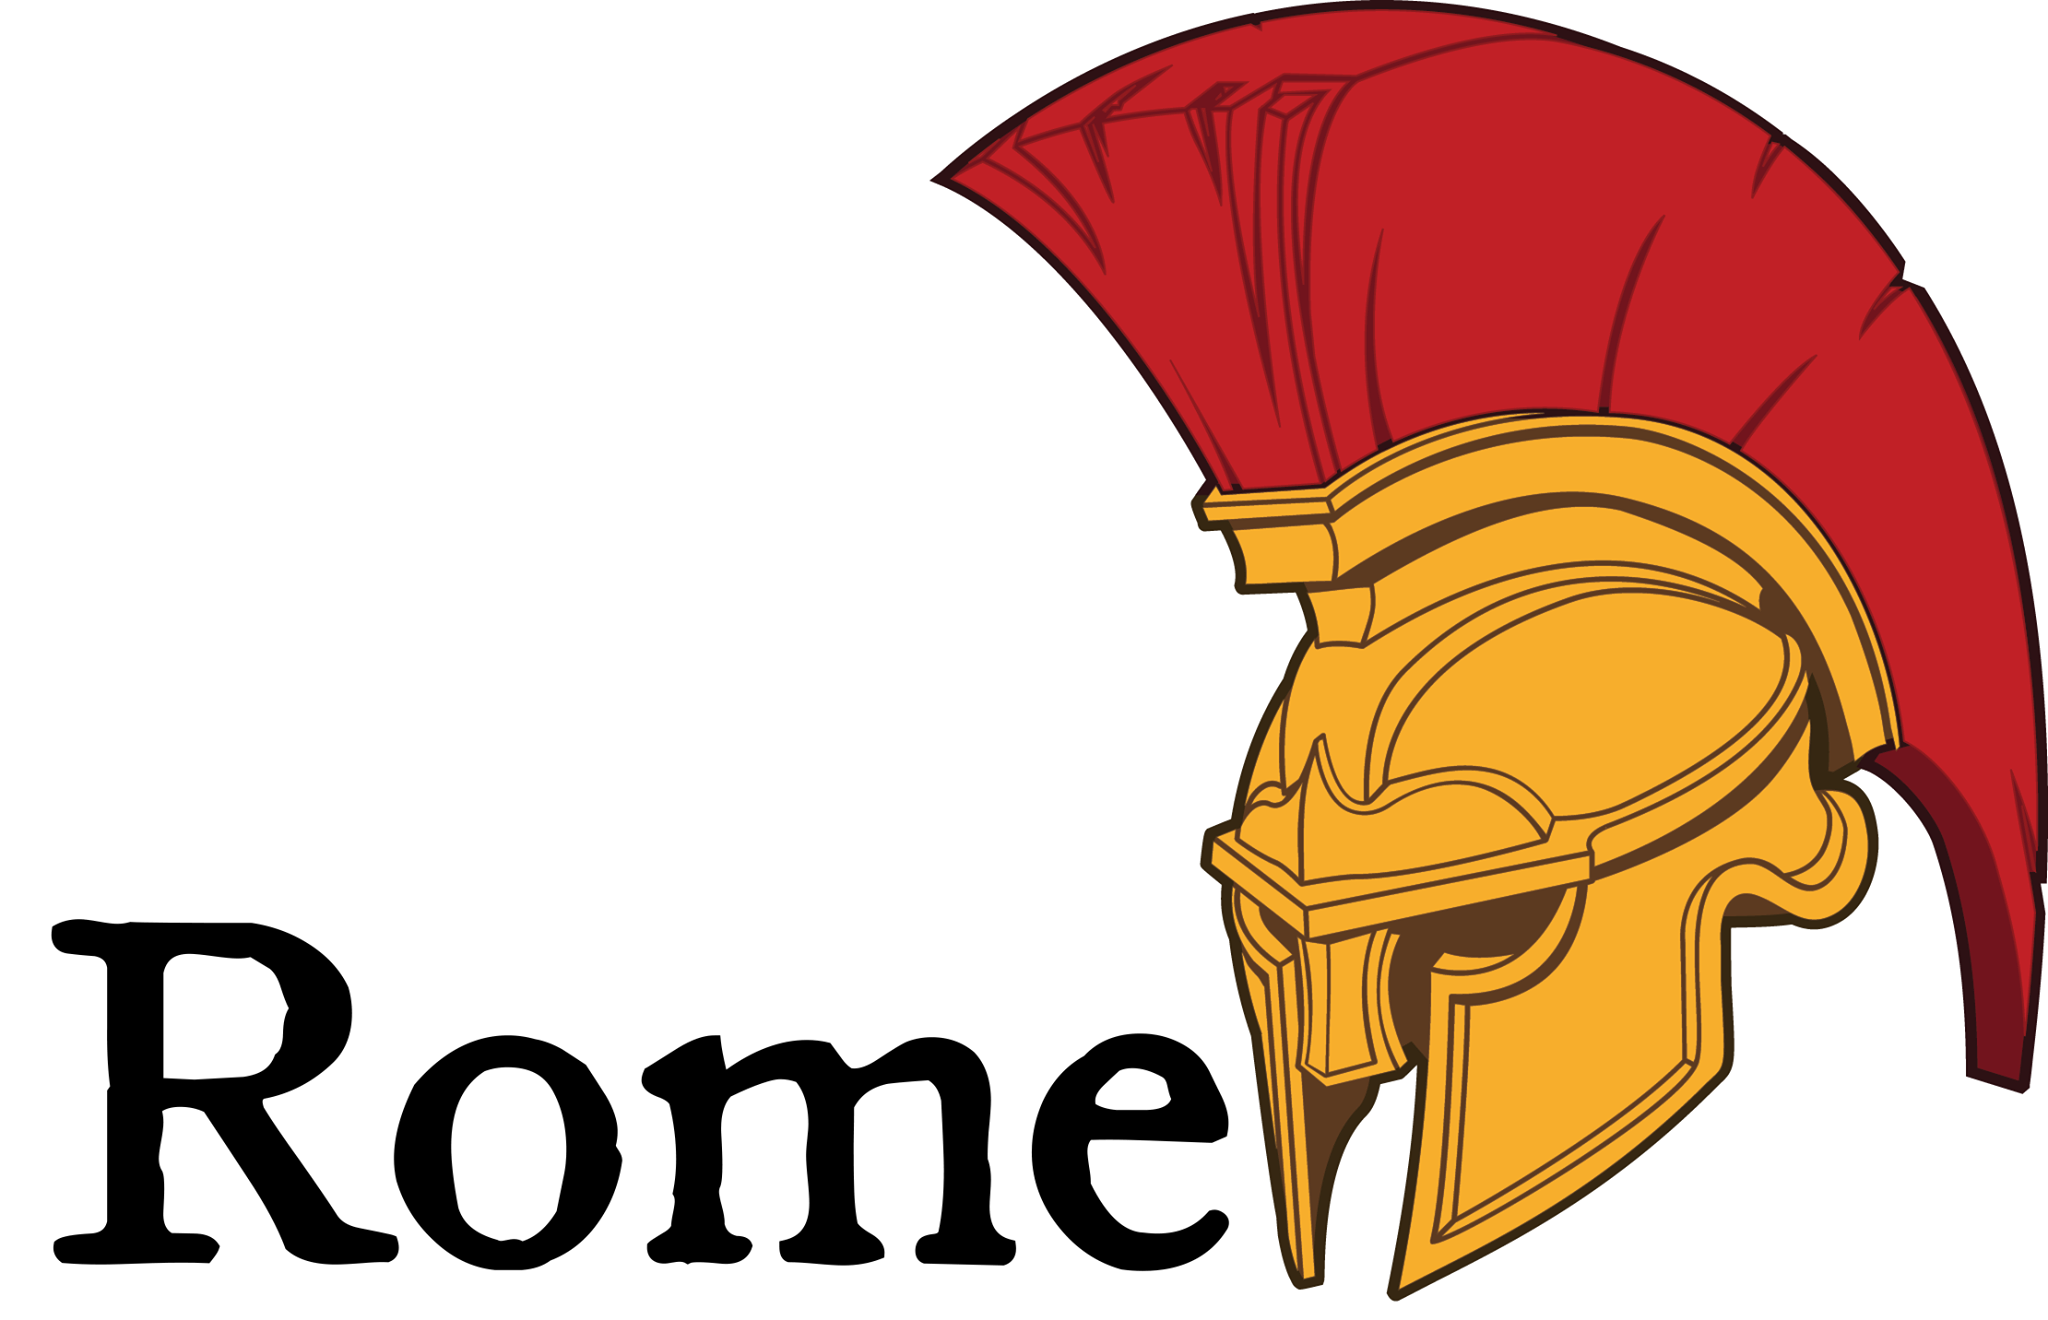 Rome, logo of an ancient Greek spartan helmet